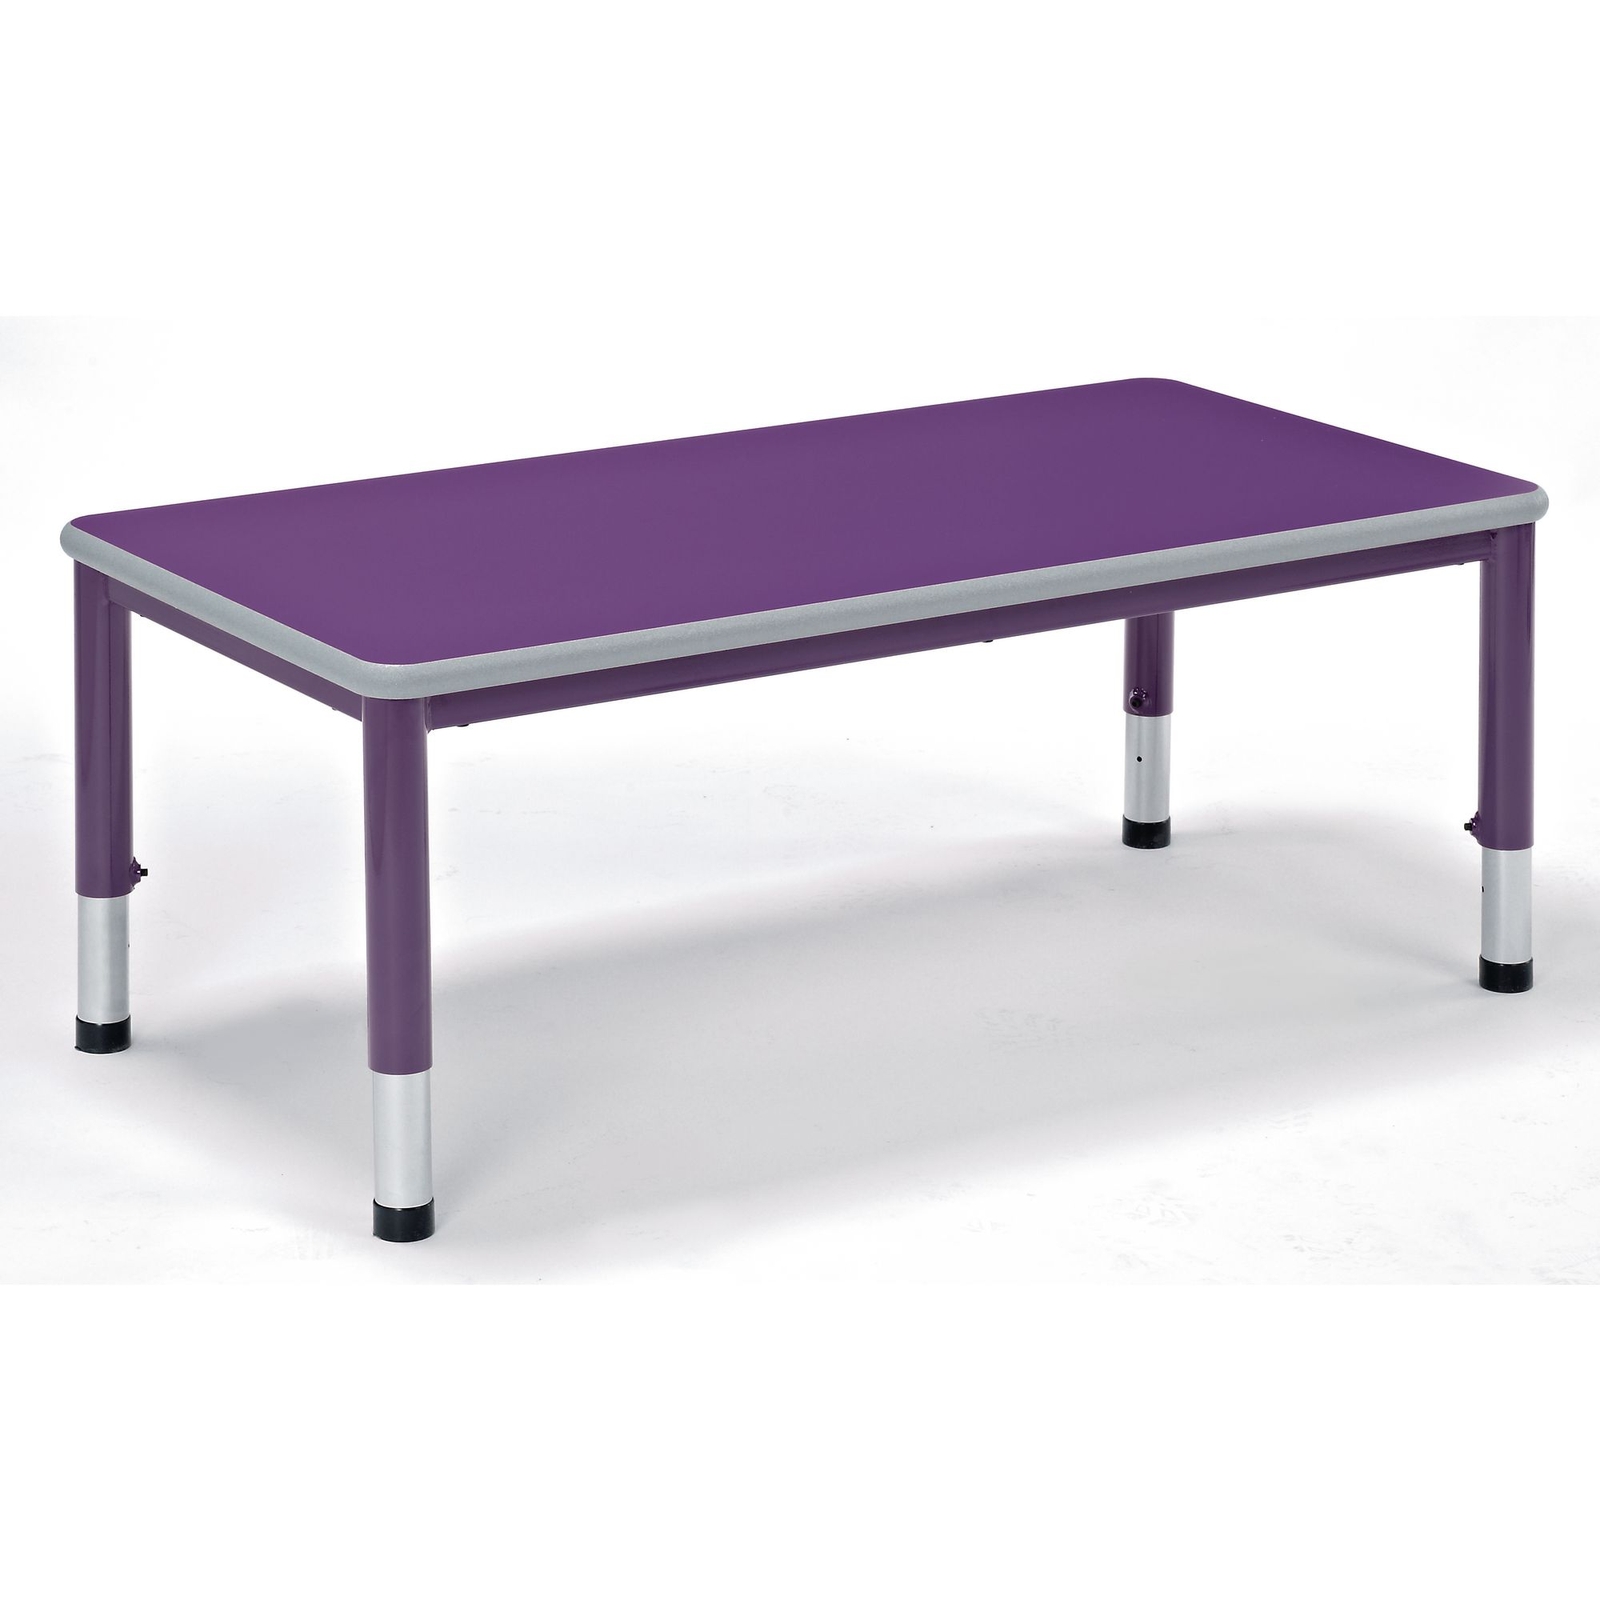 Harlequin Rectangular Height Adjustable Steel Classroom Table - 1200 x 600 x 600mm - Soft Blue